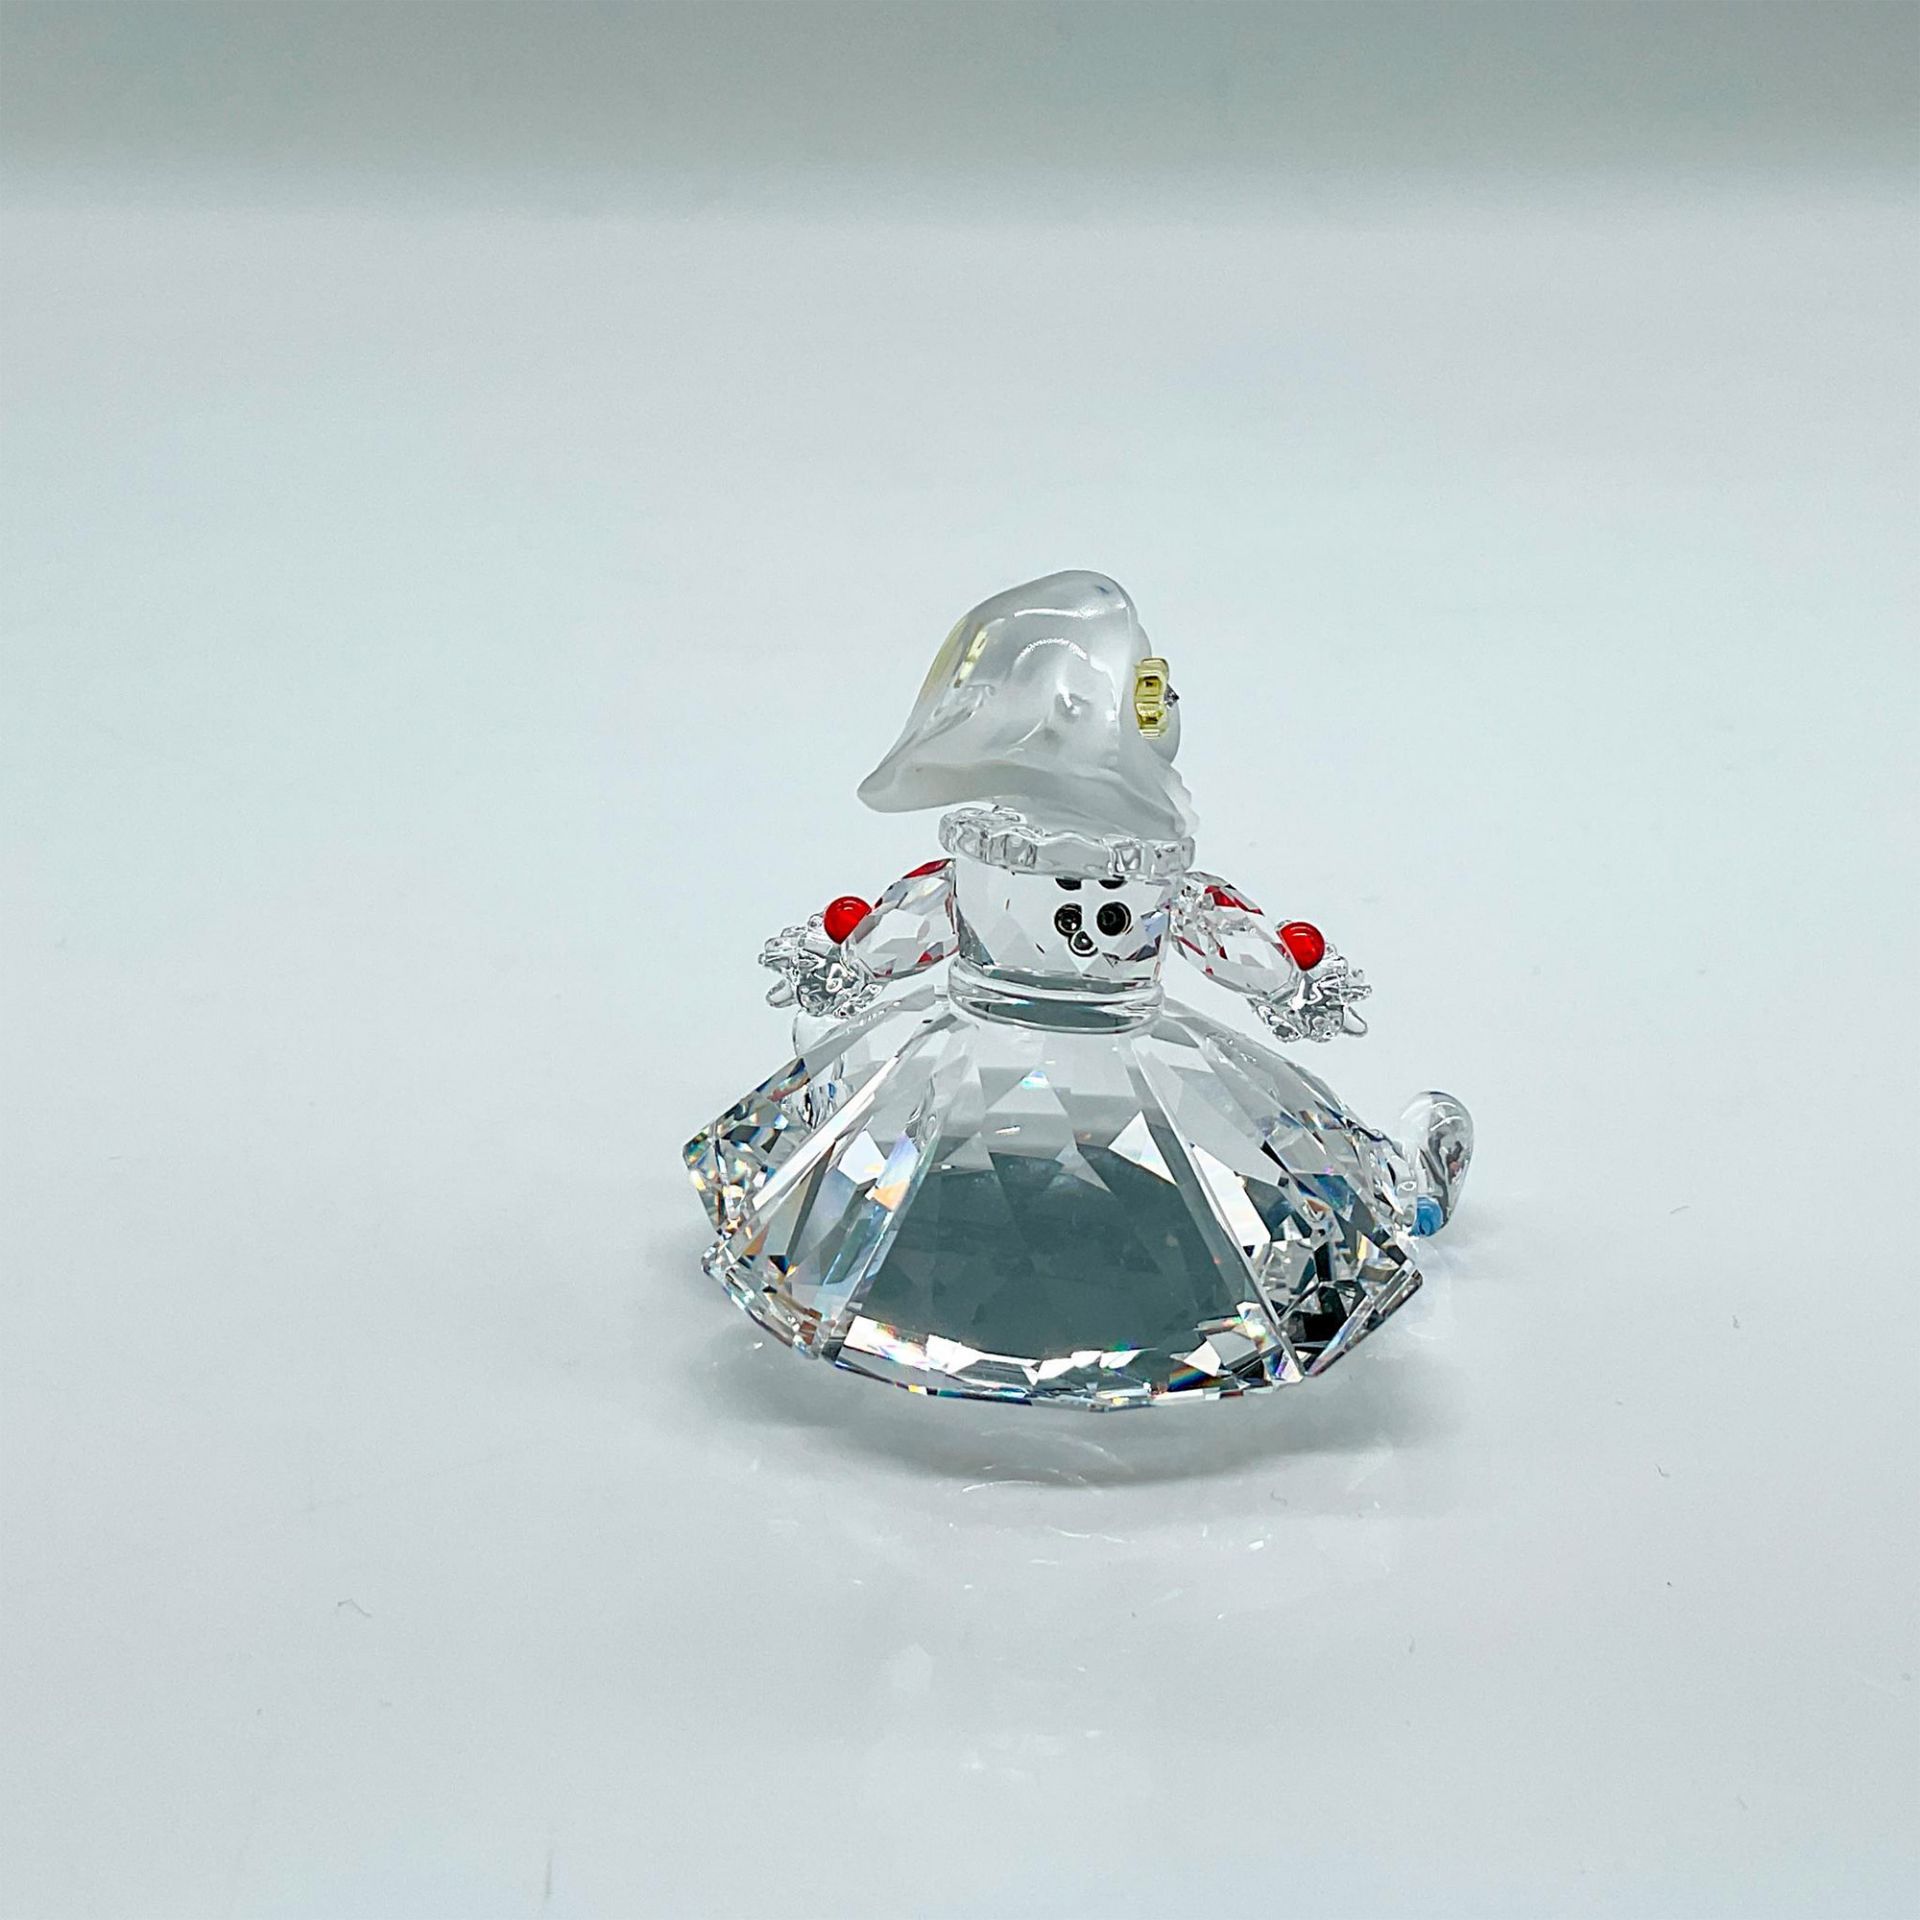 Swarovski Crystal Figurine, Doll - Image 2 of 4